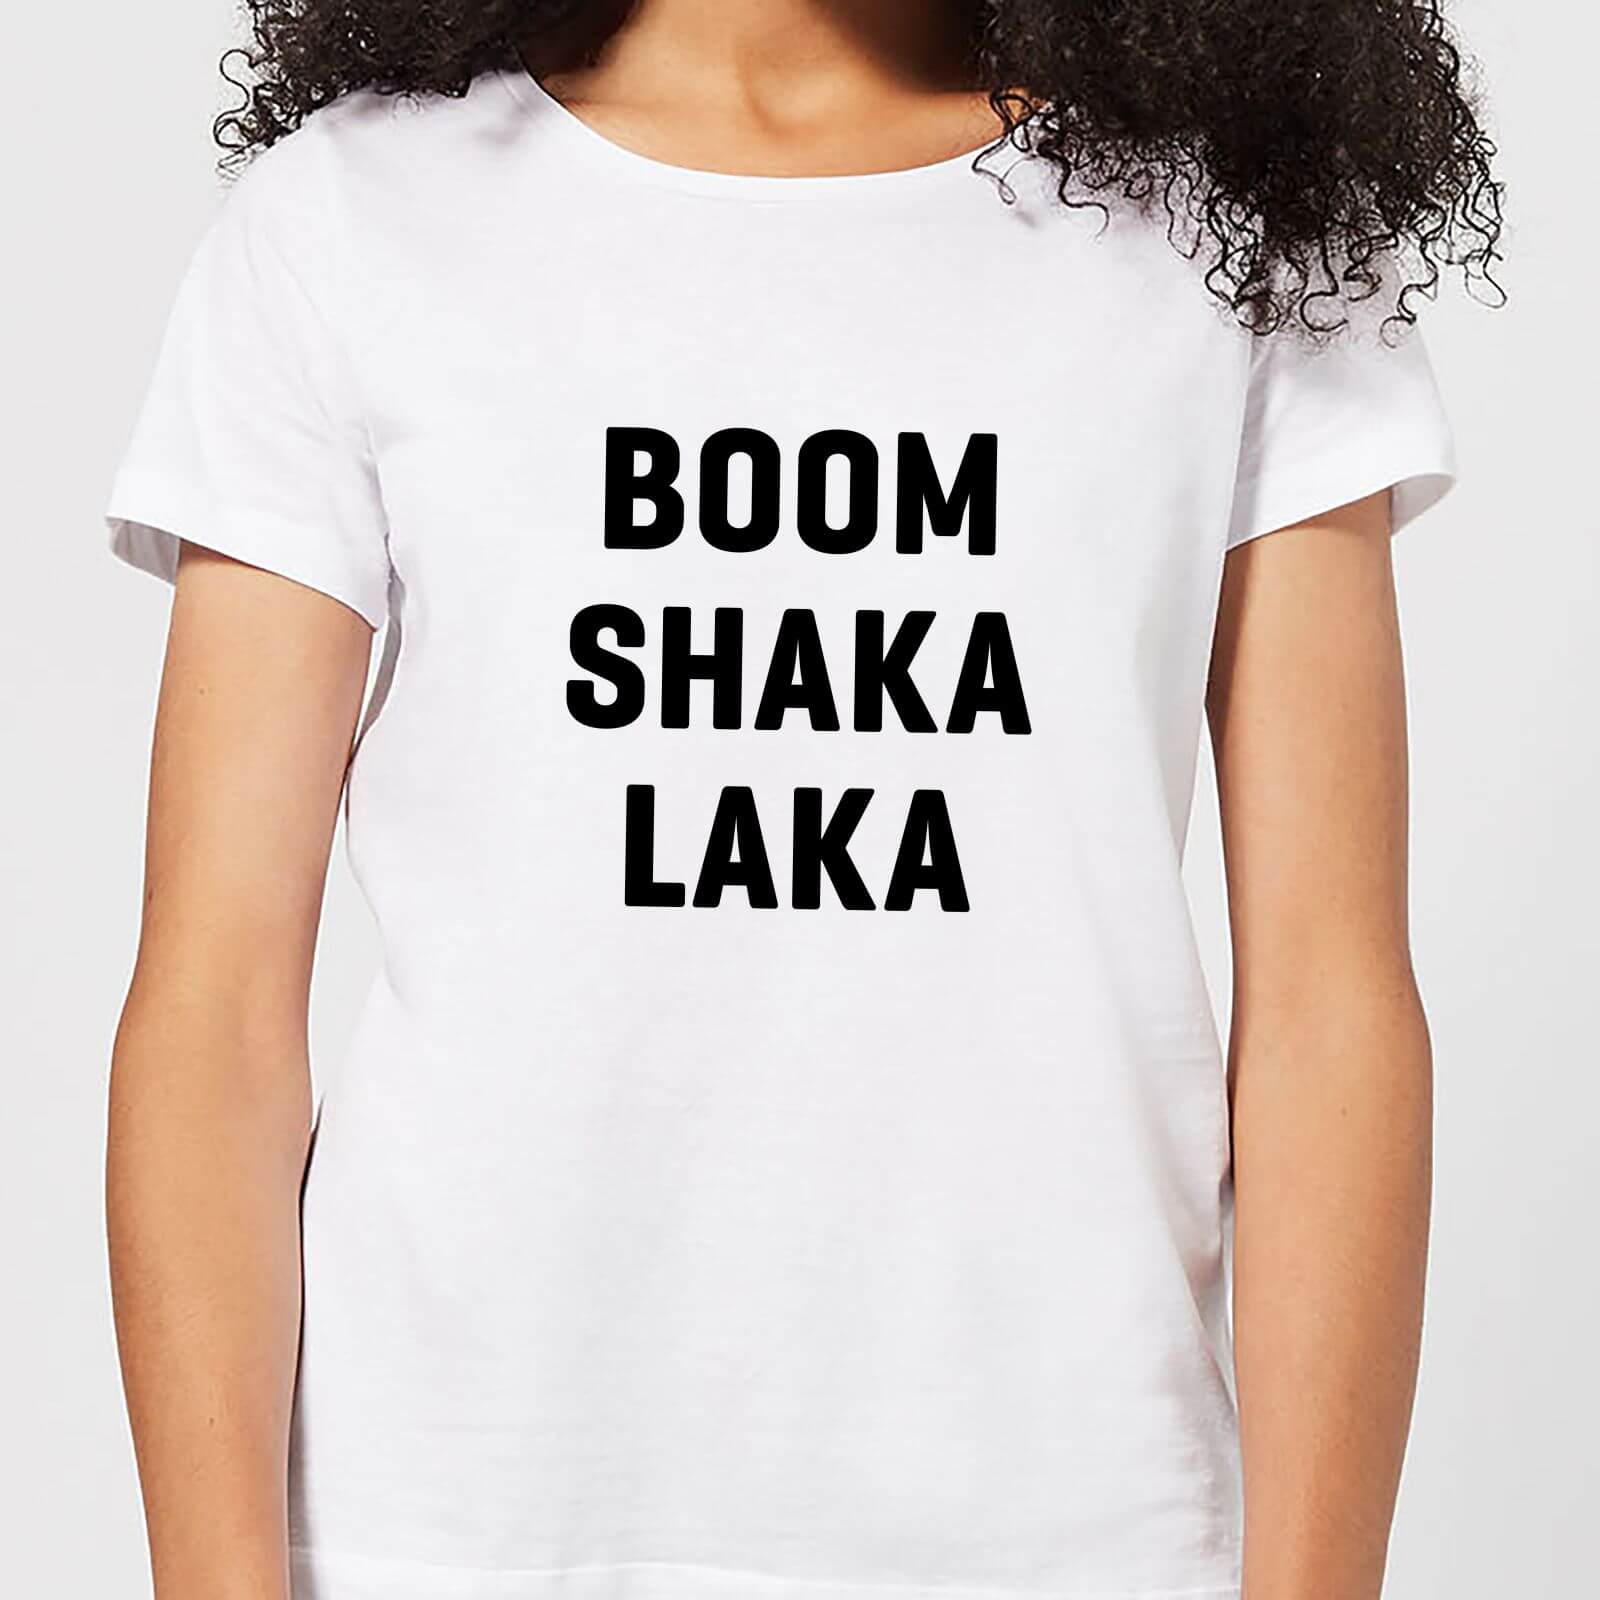 Boom Shaka Laka Women's T-Shirt - White - M - White